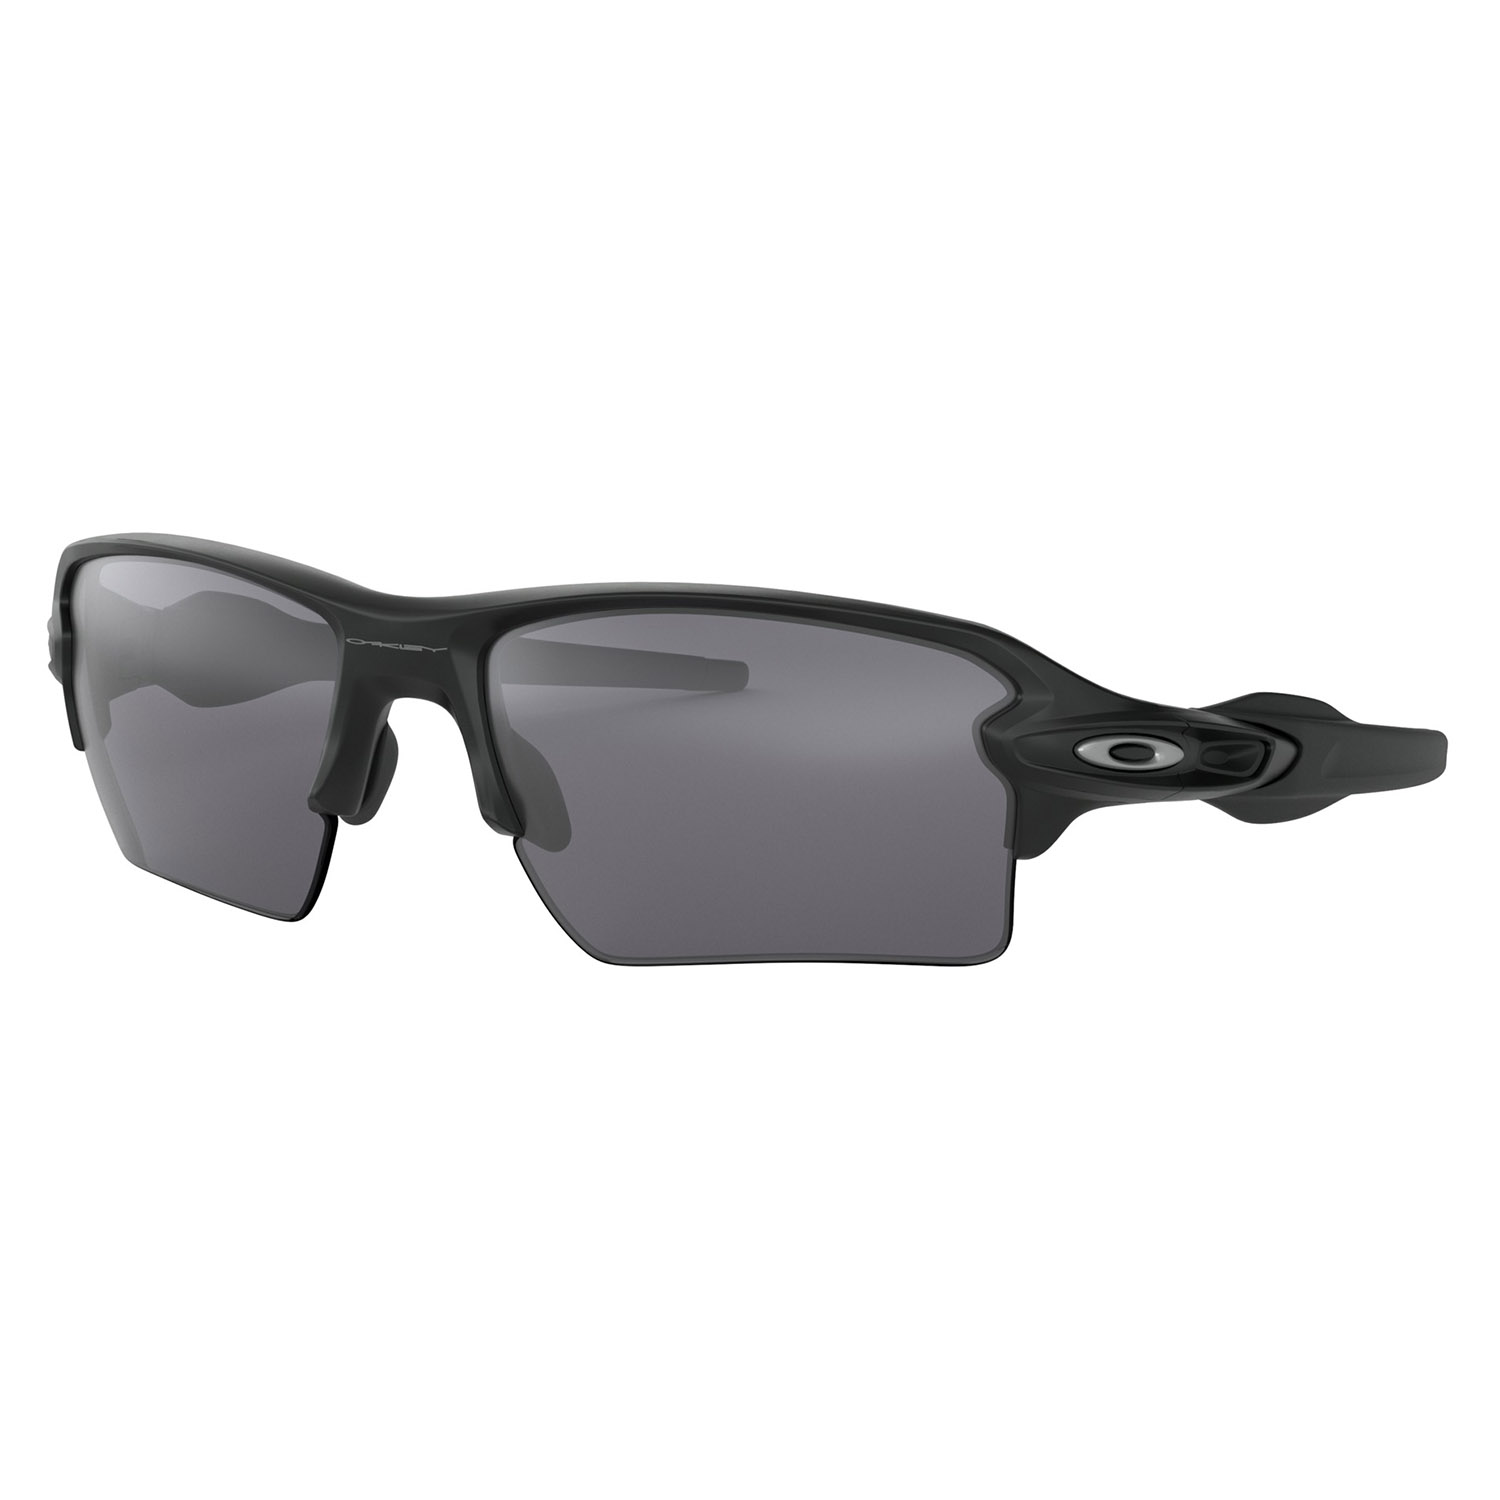 Oakley Flak 2.0 XL Sports Performance Non Polarized Sunglasses, Matte Black - image 1 of 6